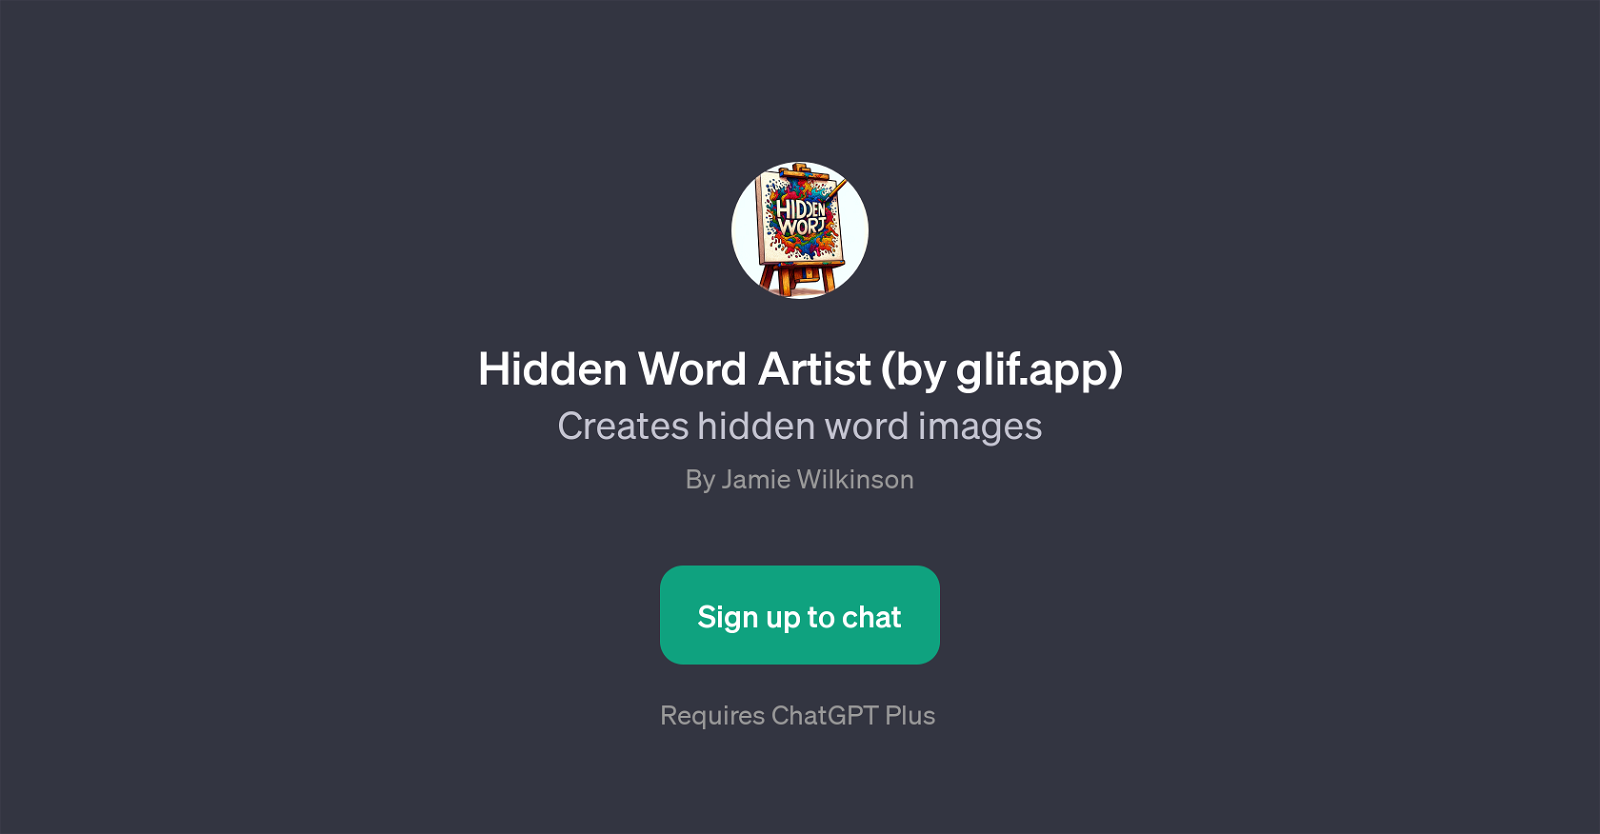 Hidden Word Artist (by glif.app) website